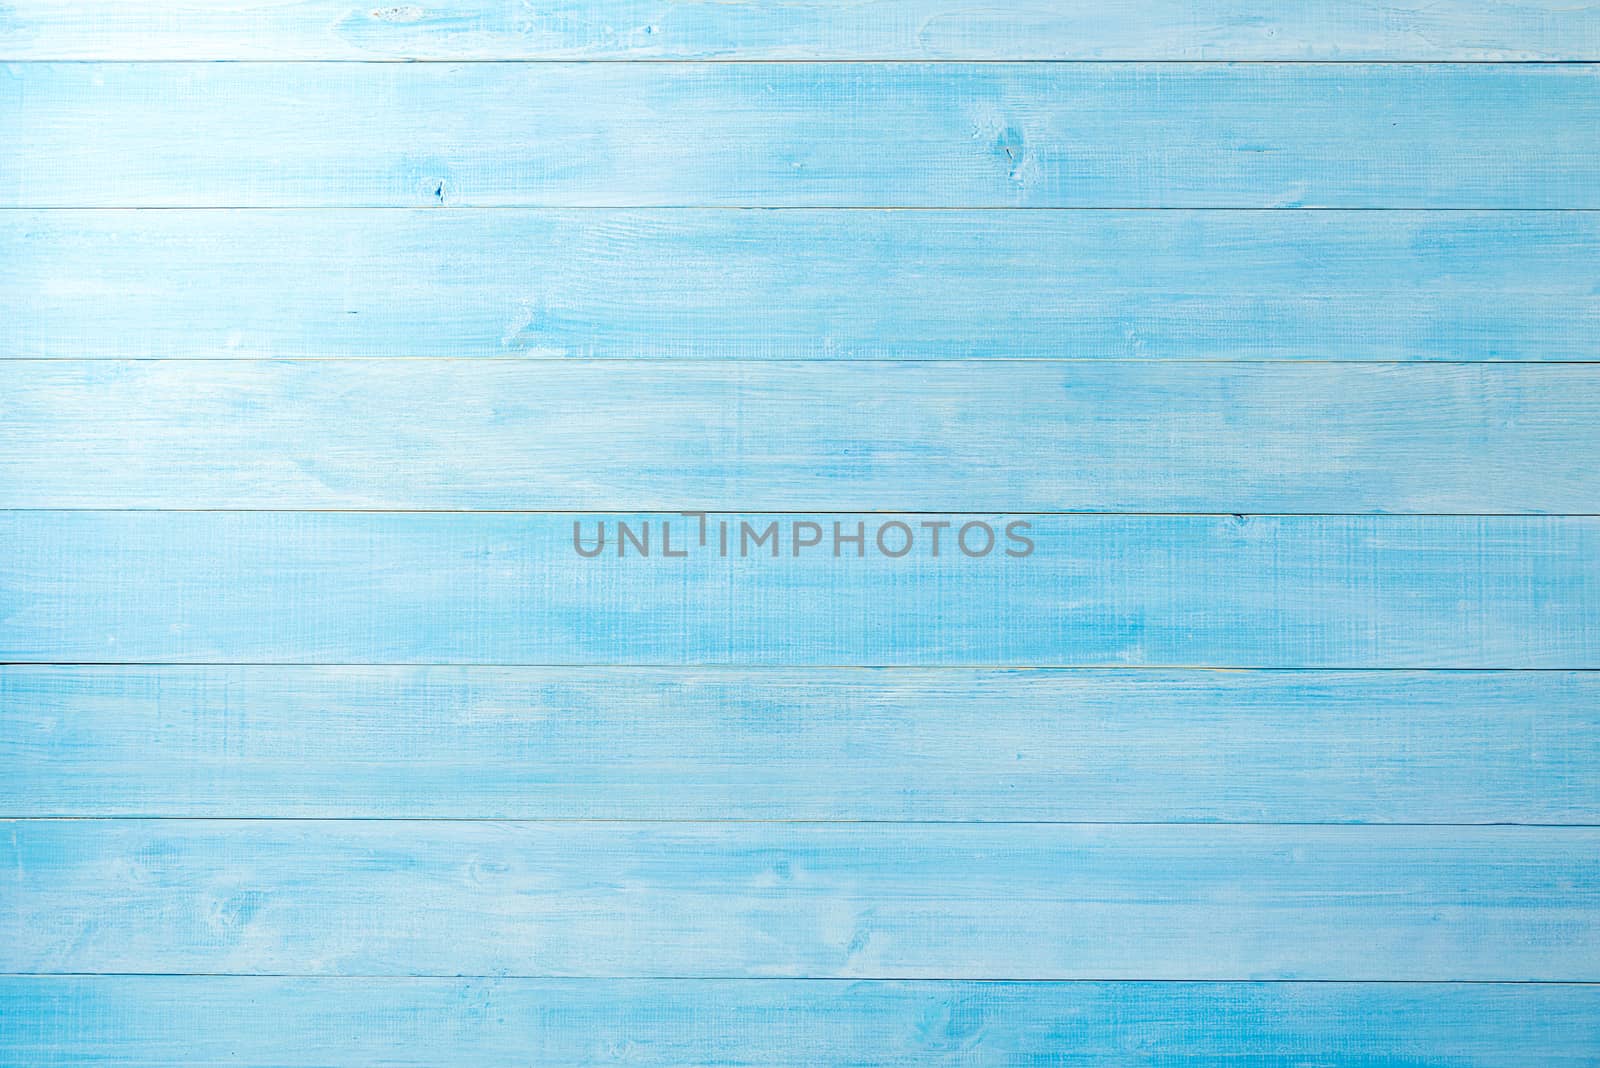 light blue wood plank floor for design background